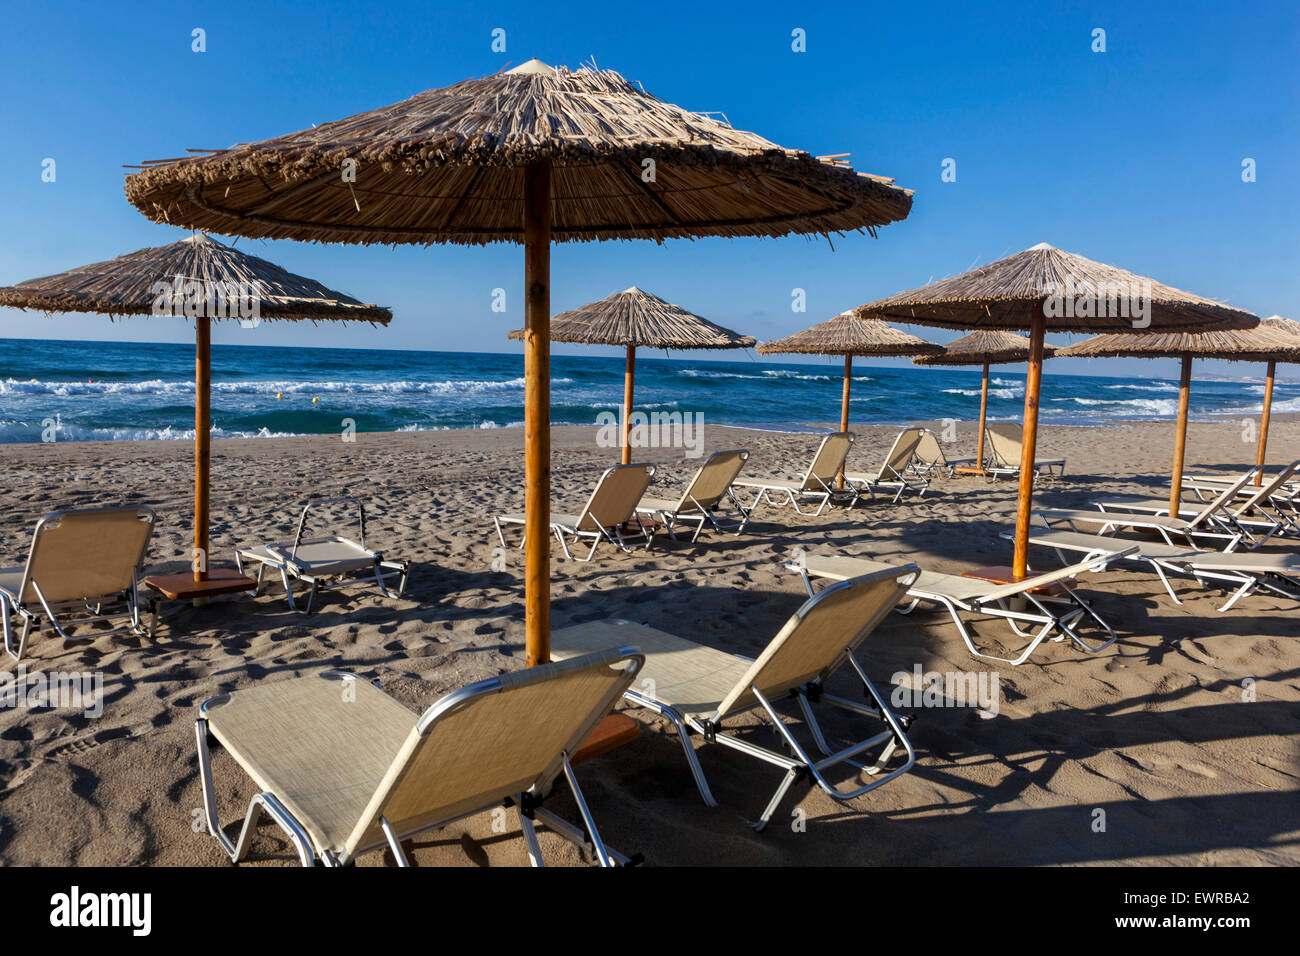 Straw beach umbrellas and sun loungers on the empty beach of Rethymno, Crete beach Greece Europe Stock Photo